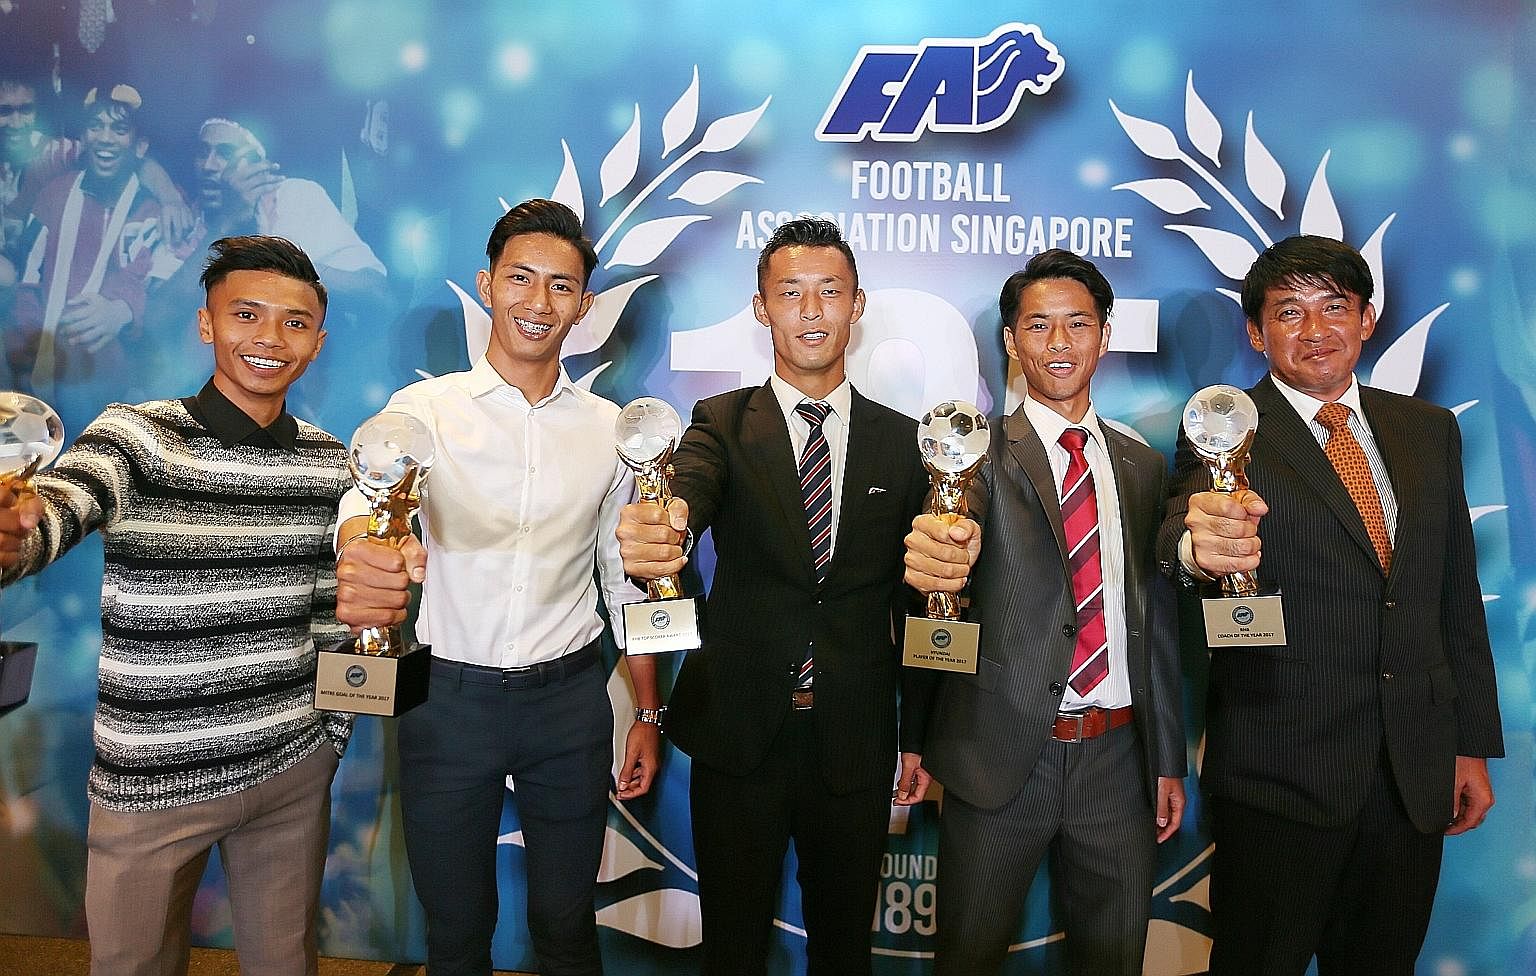 From left: Hazzuwan Halim, Huzaifah Aziz, Tsubasa Sano, Kento Nagasaki and Kazuaki Yoshinaga after receiving their trophies at the inaugural Football Association of Singapore (FAS) Nite at Marina Bay Sands Convention Centre yesterday.